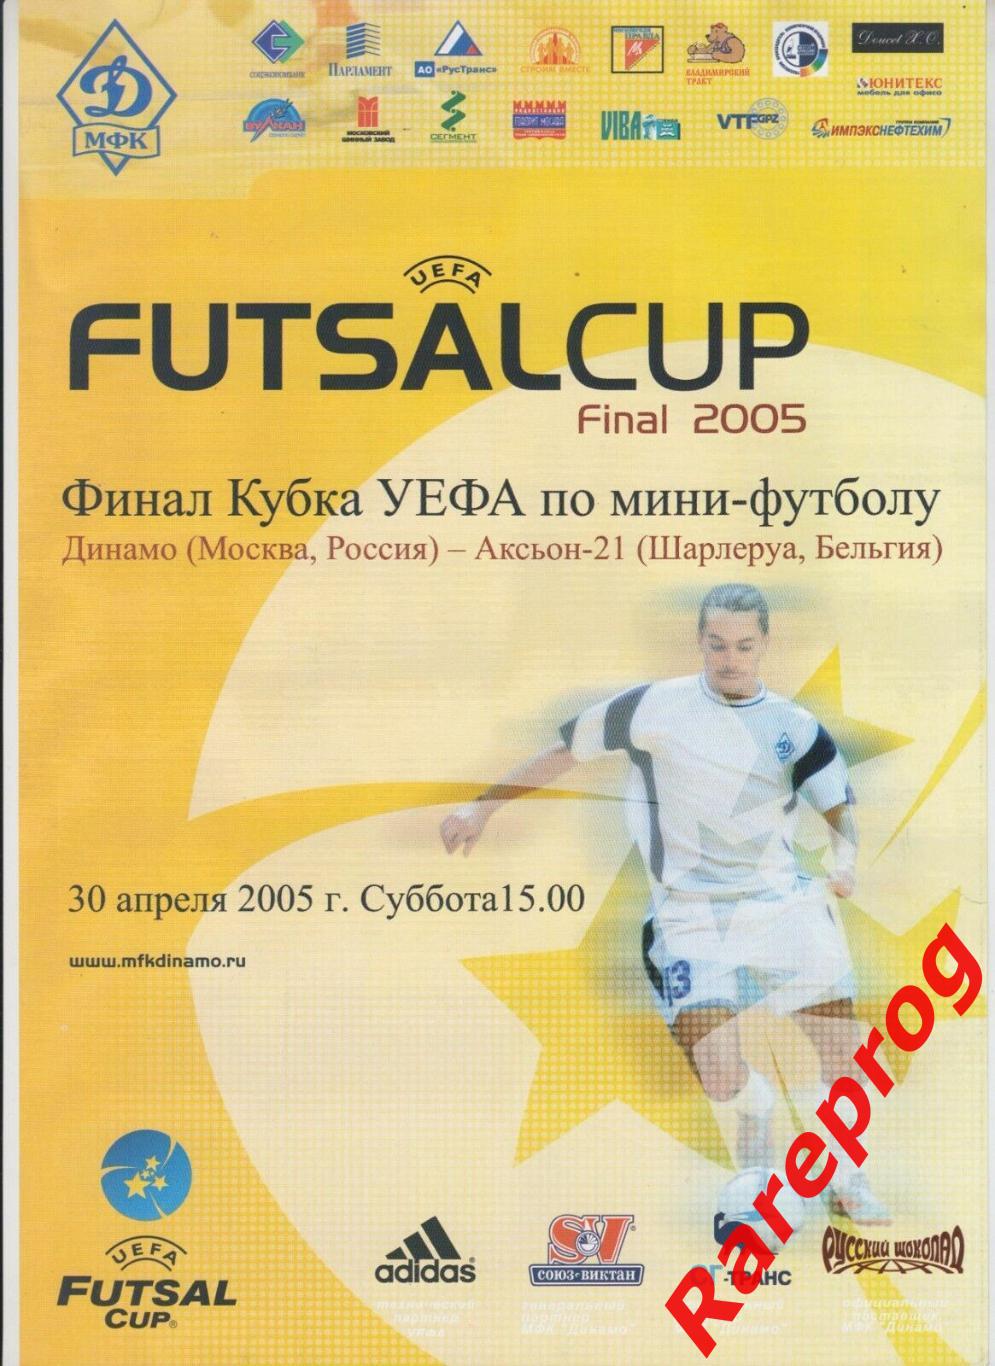 Динамо Москва Россия - Аксьон-21 Бельгия 2005 финал Футзал Кубок УЕФА мини